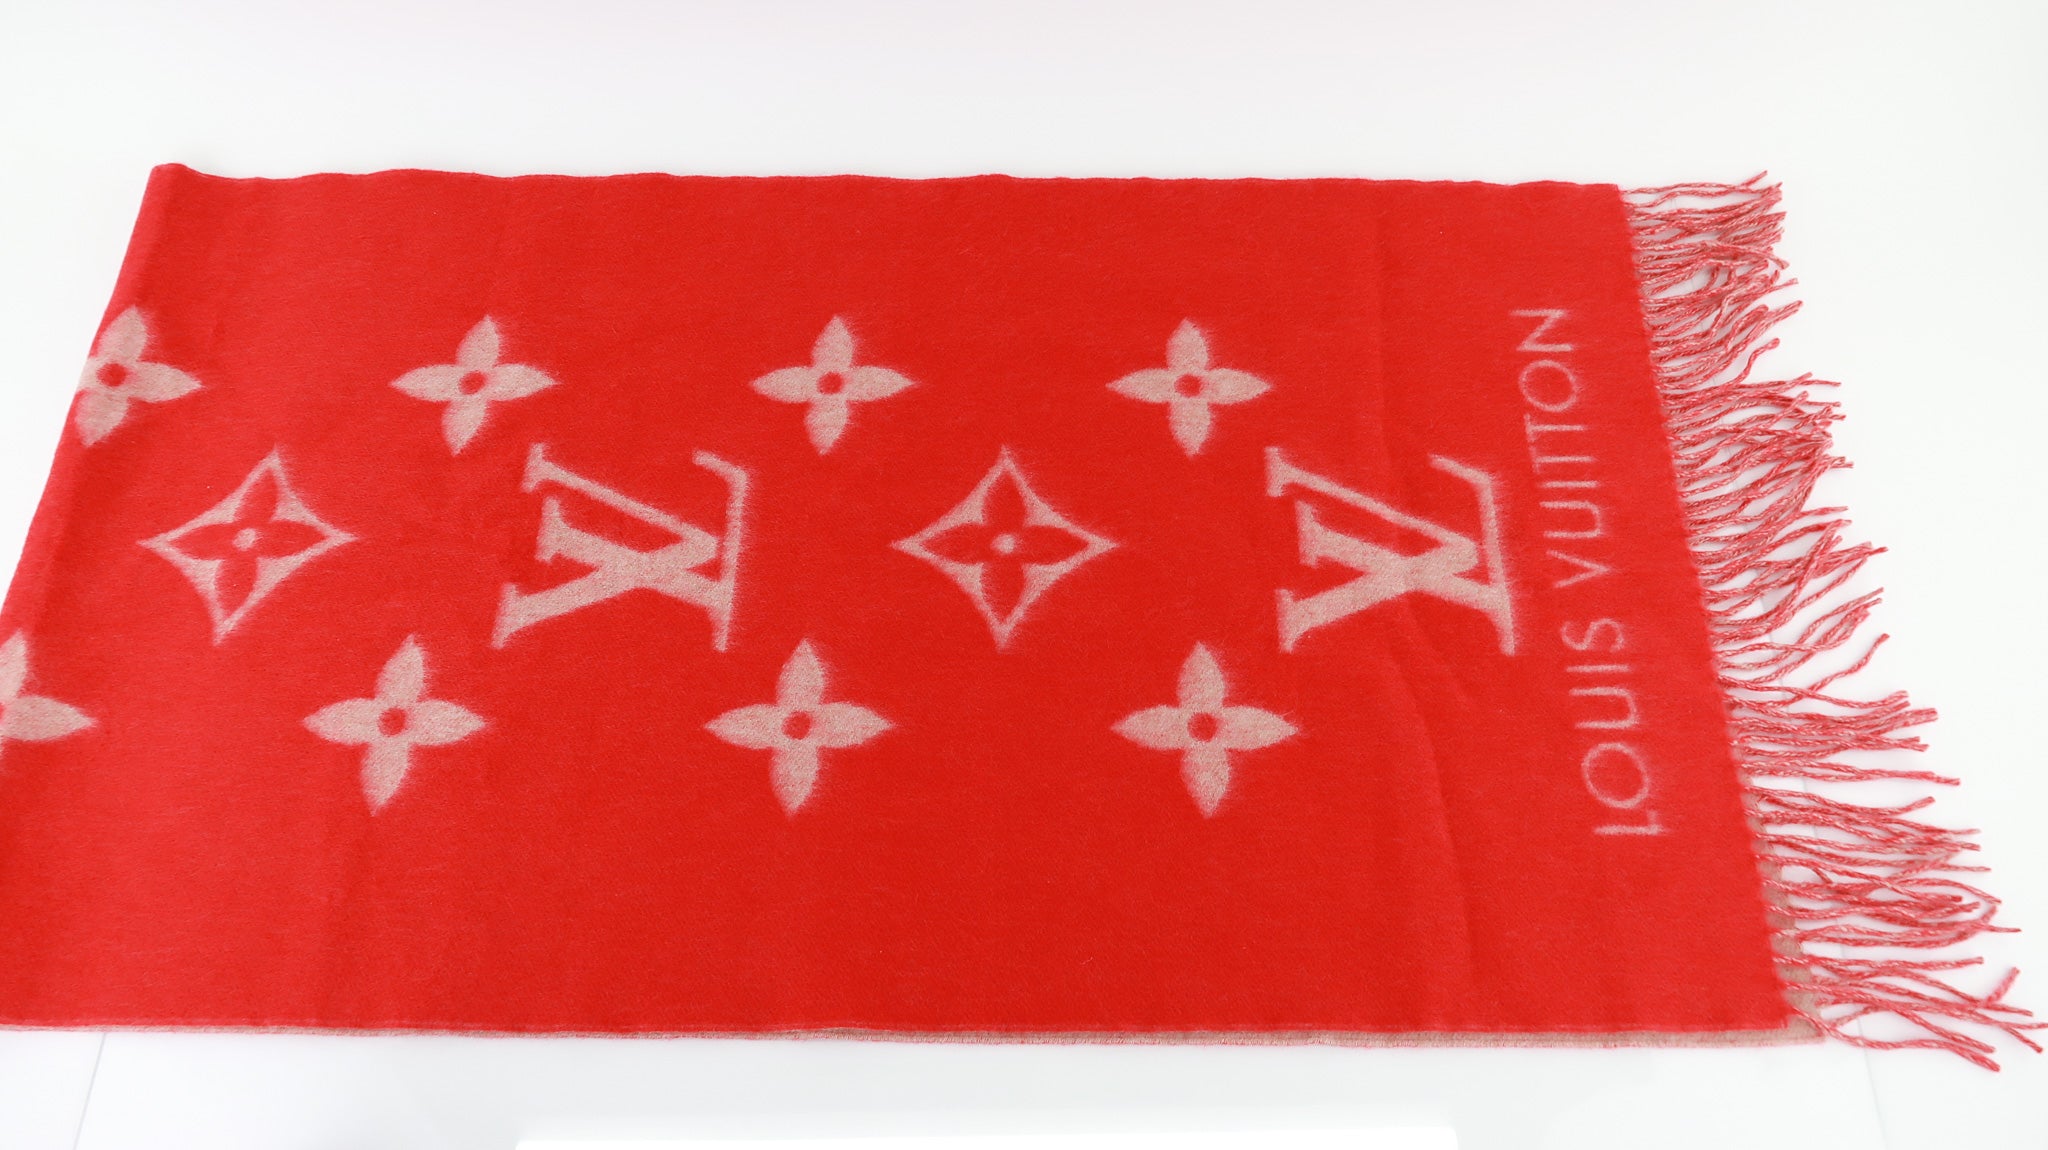 Louis Vuitton monogram scarf - Kristian & Aleksander